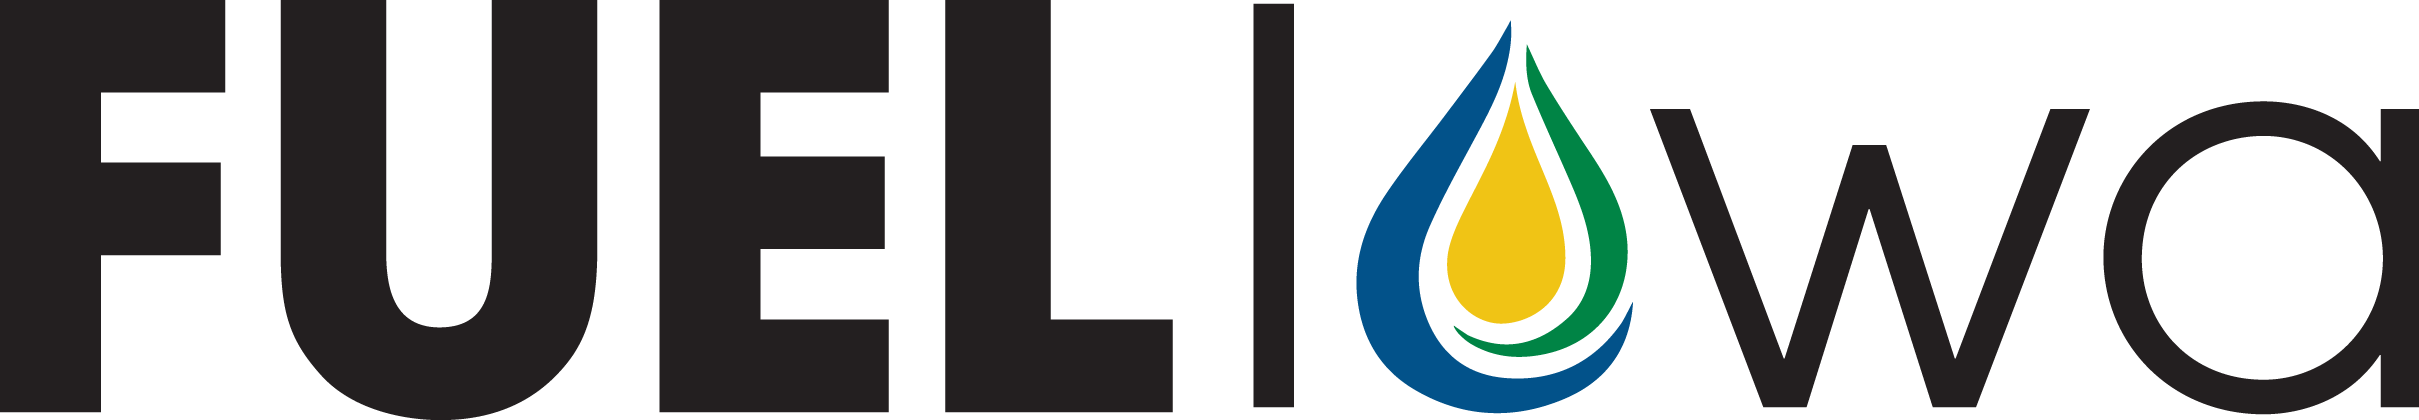 FuelIowa Logo Horizontal